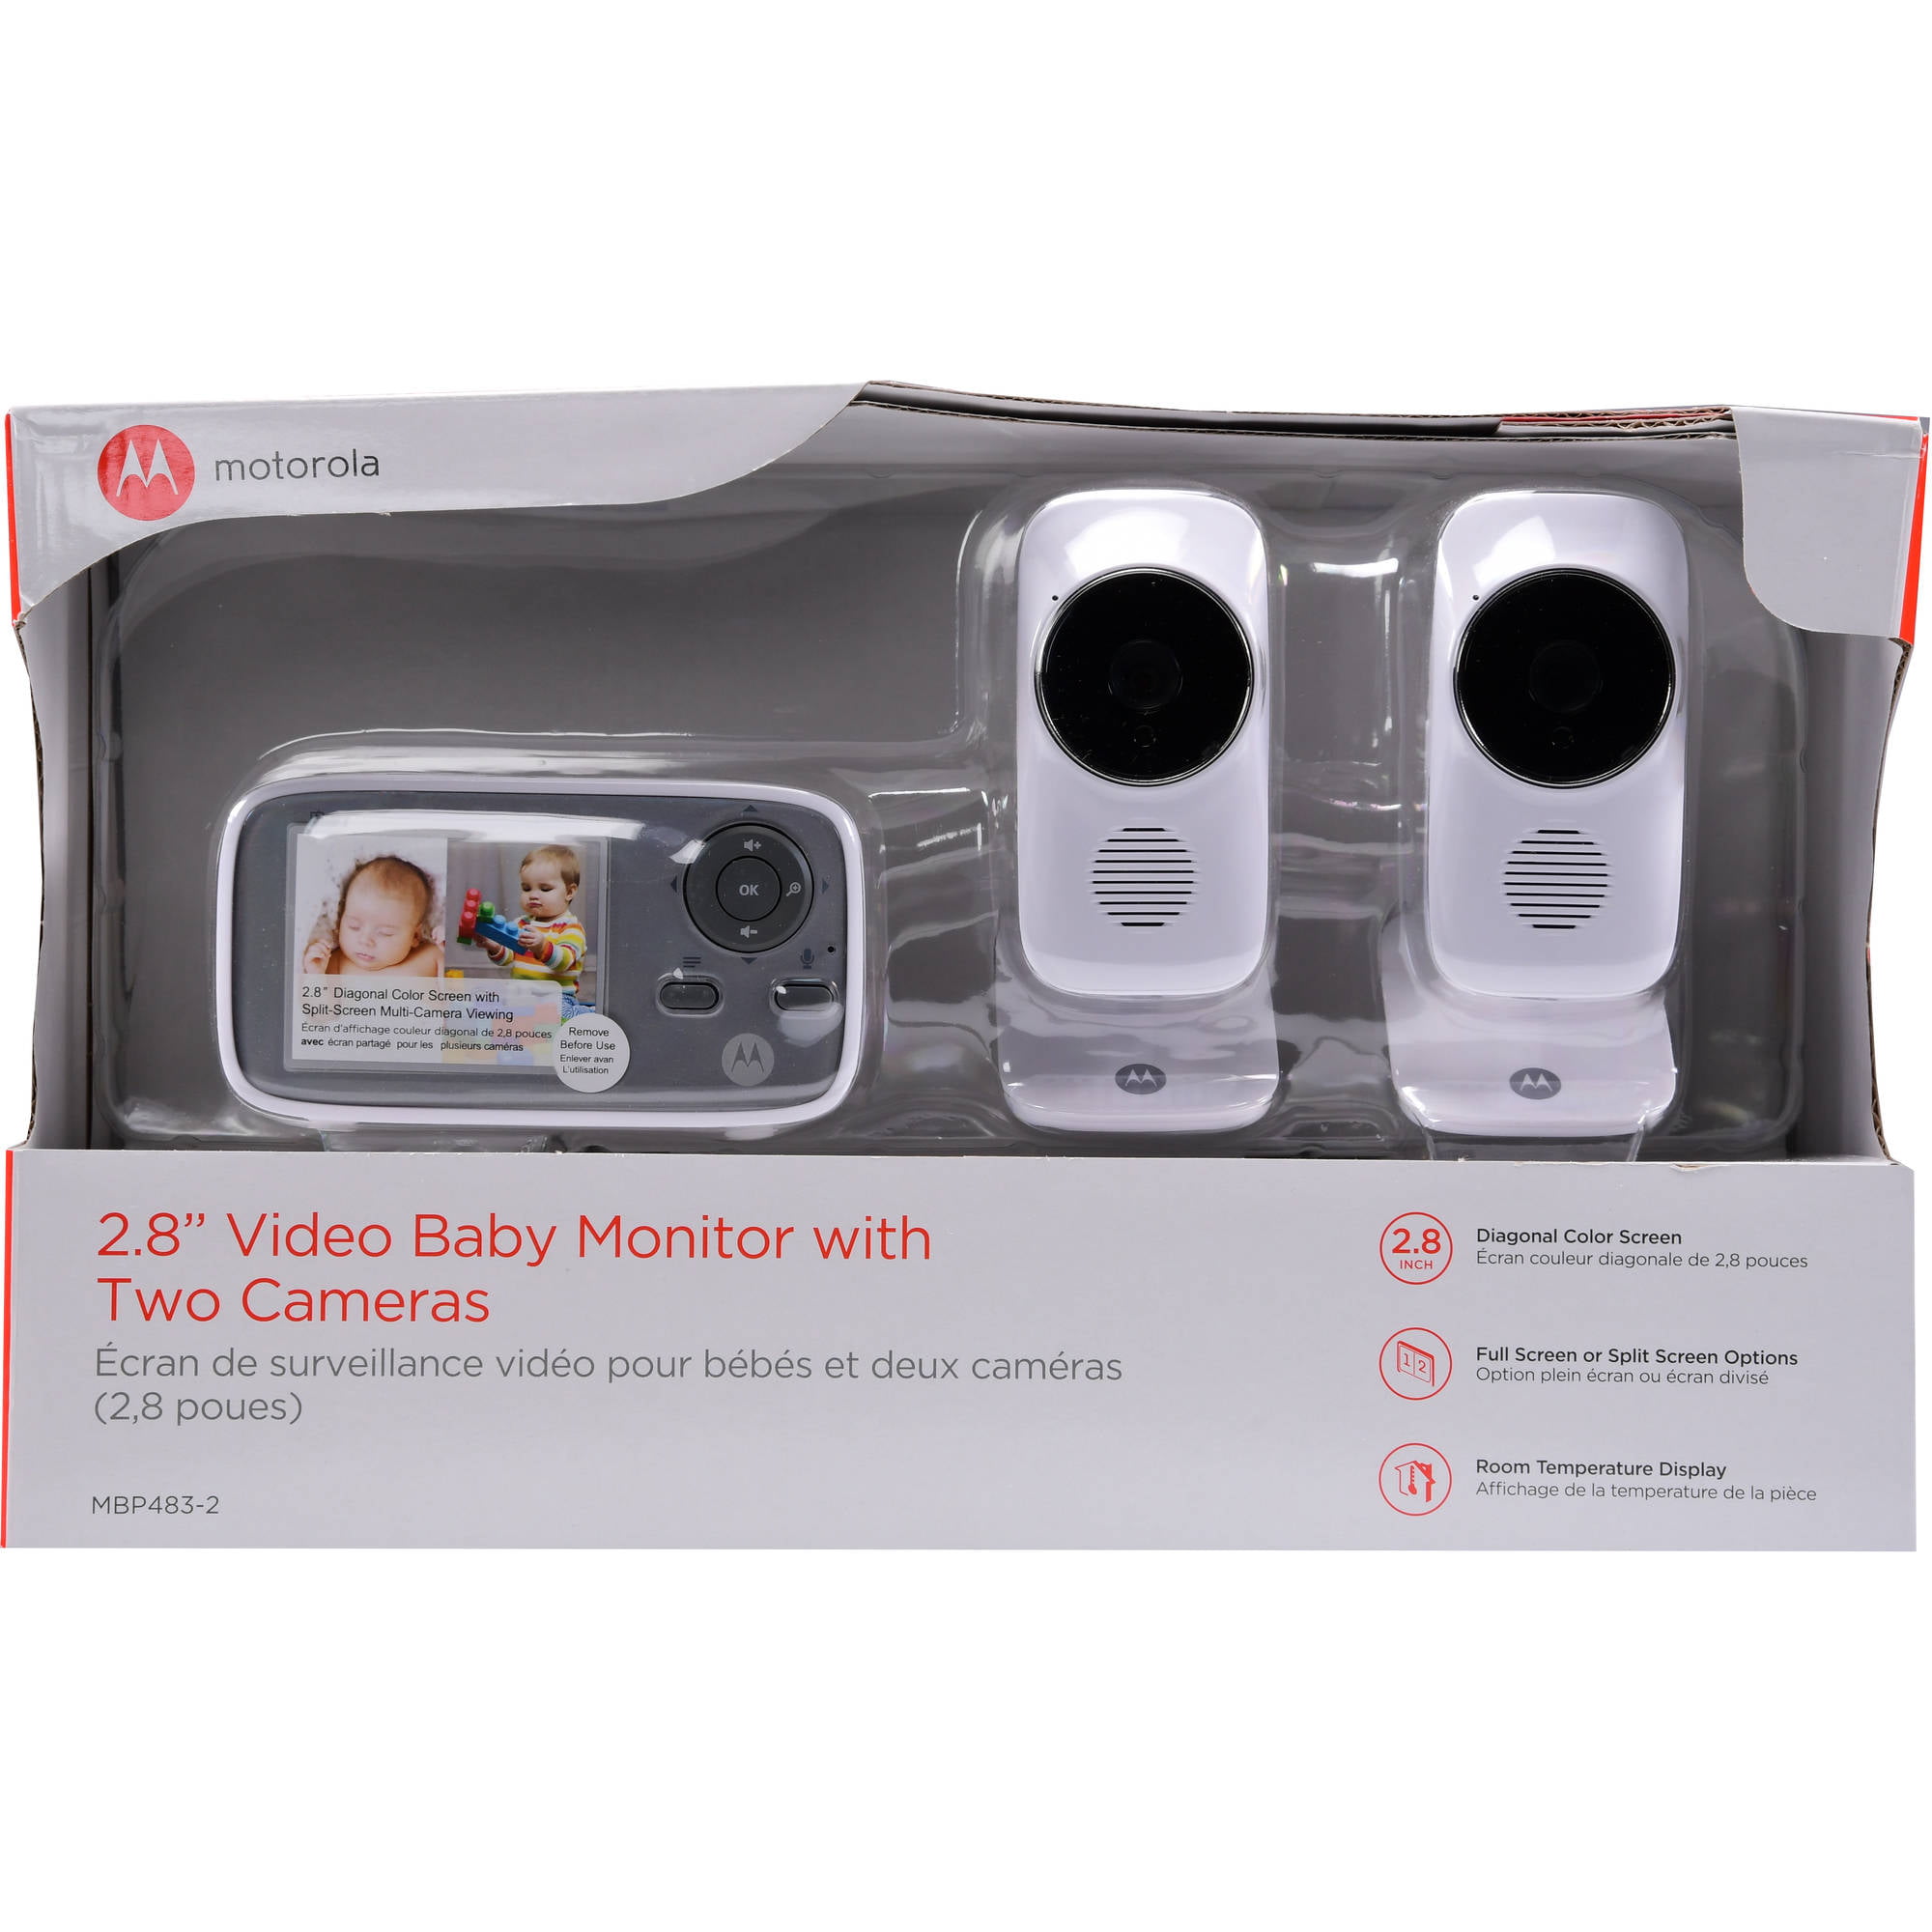 motorola 2.8 video baby monitor with 2 cameras